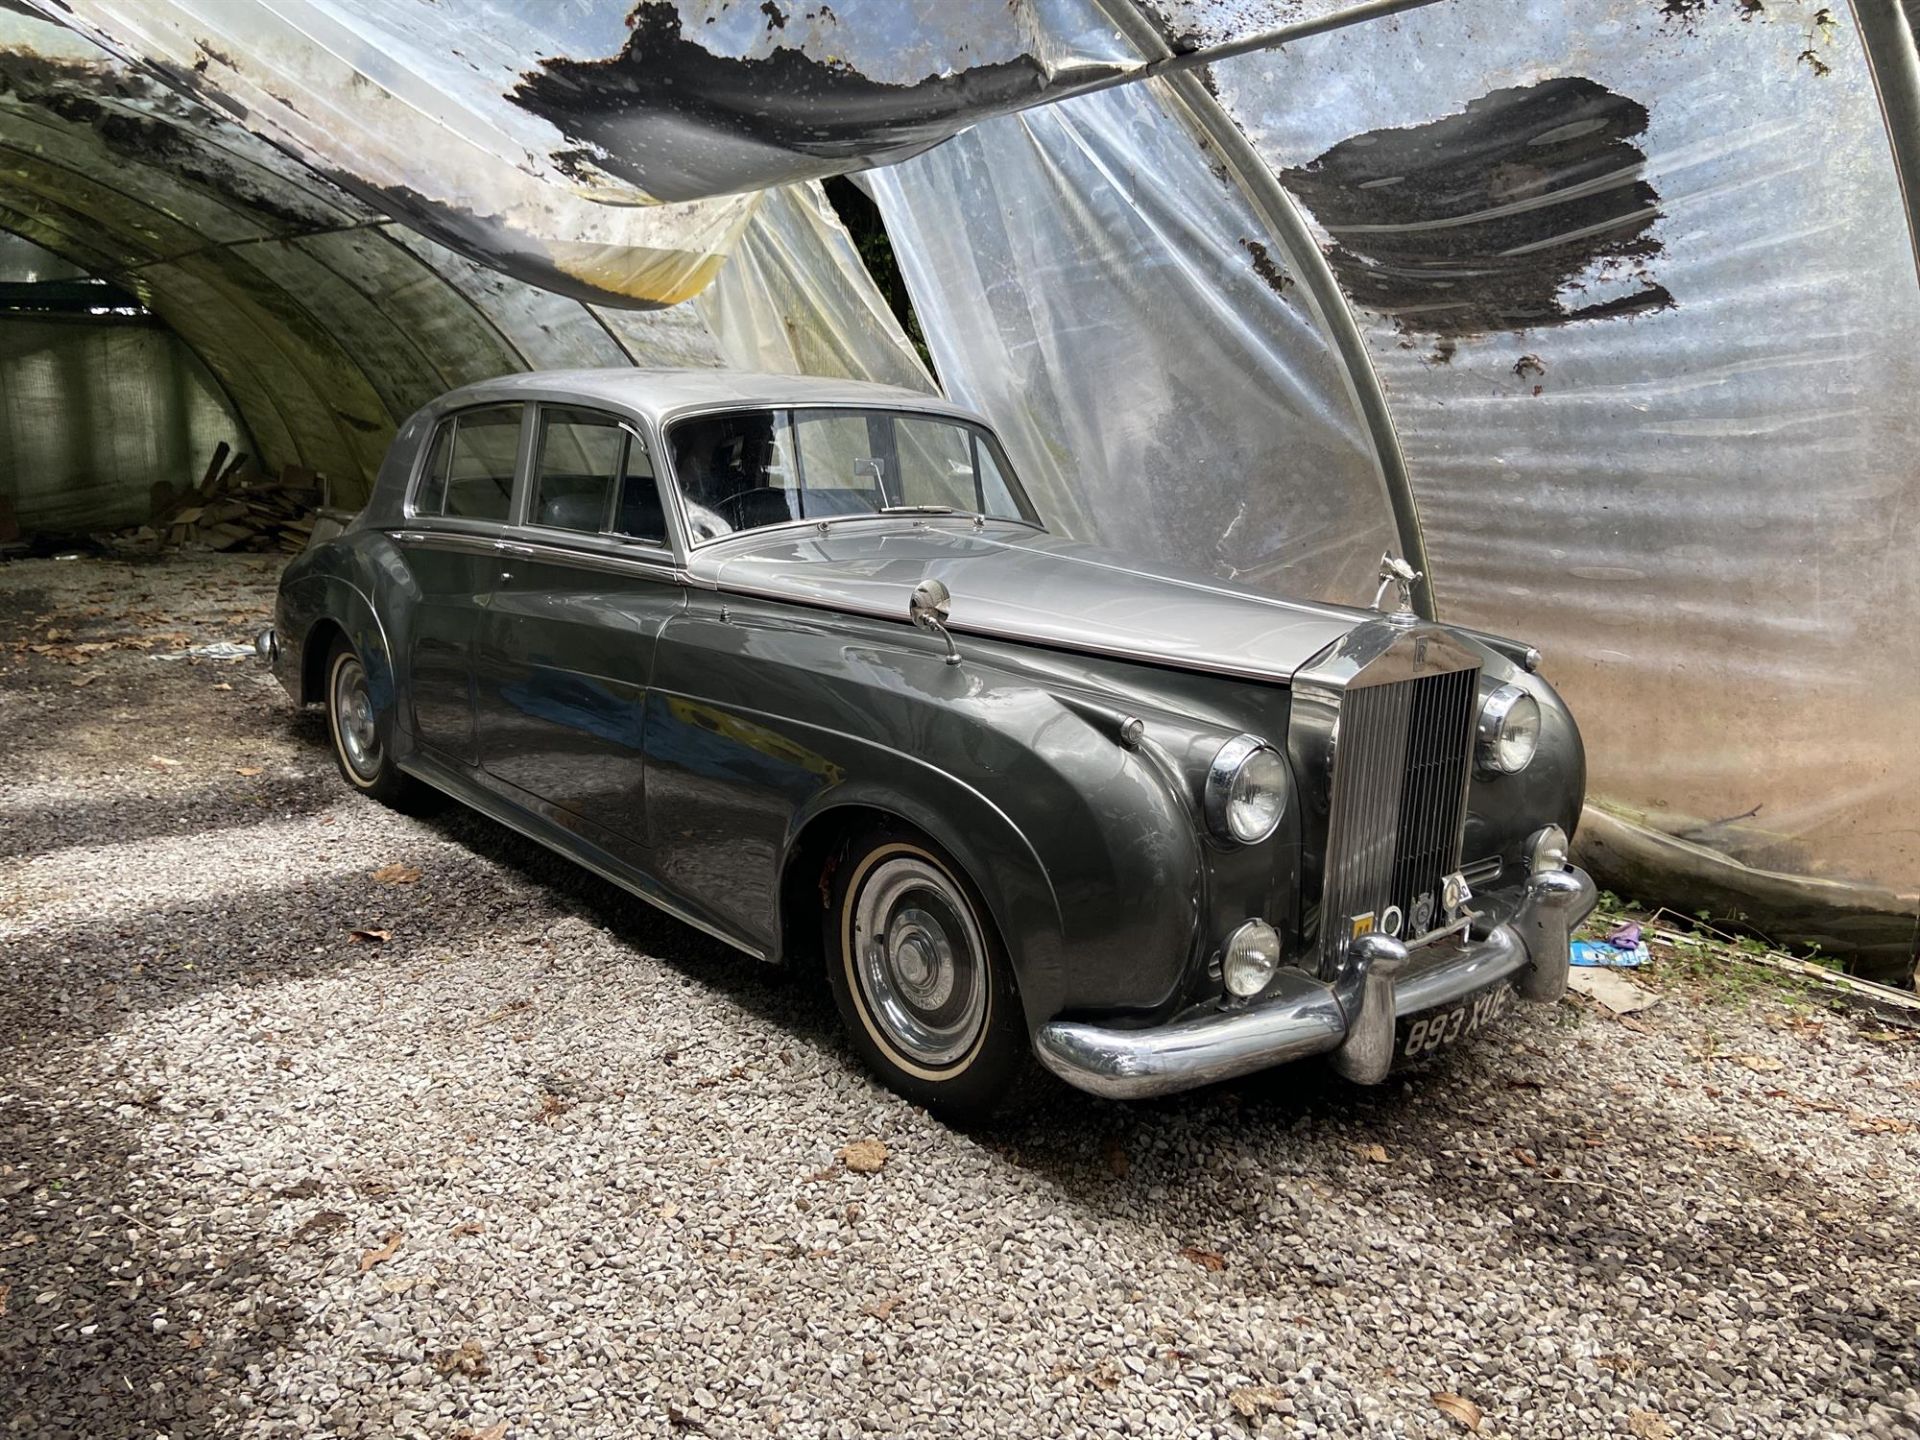 1959 Rolls-Royce Silver Cloud I - Image 10 of 10